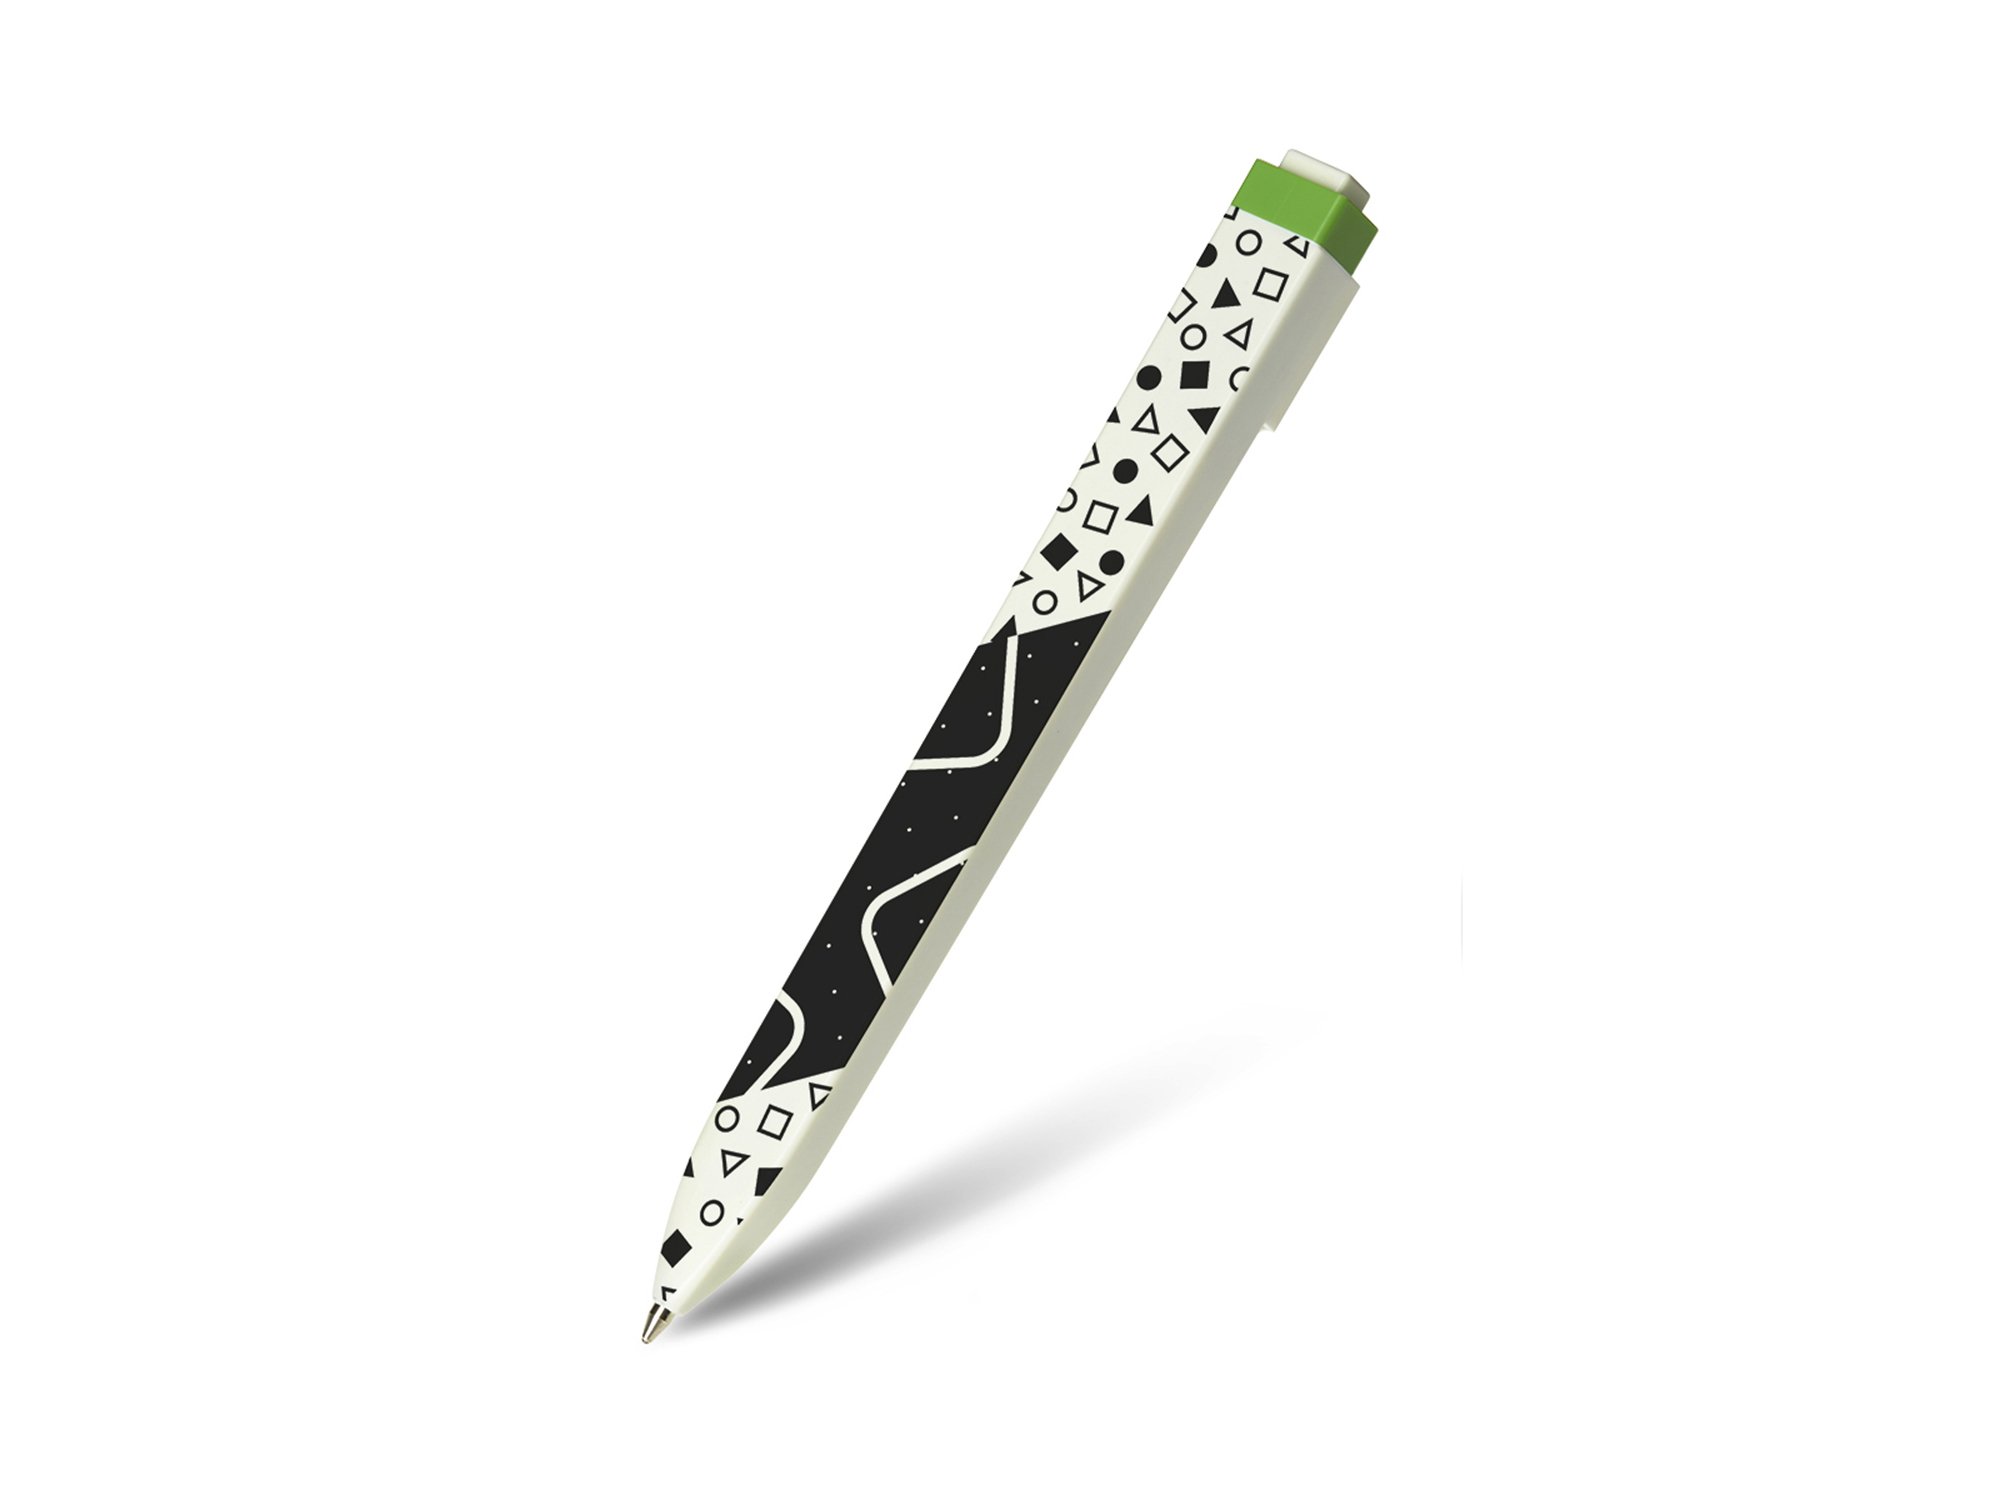 Moleskine Go Pen - Patterned Green 1mm